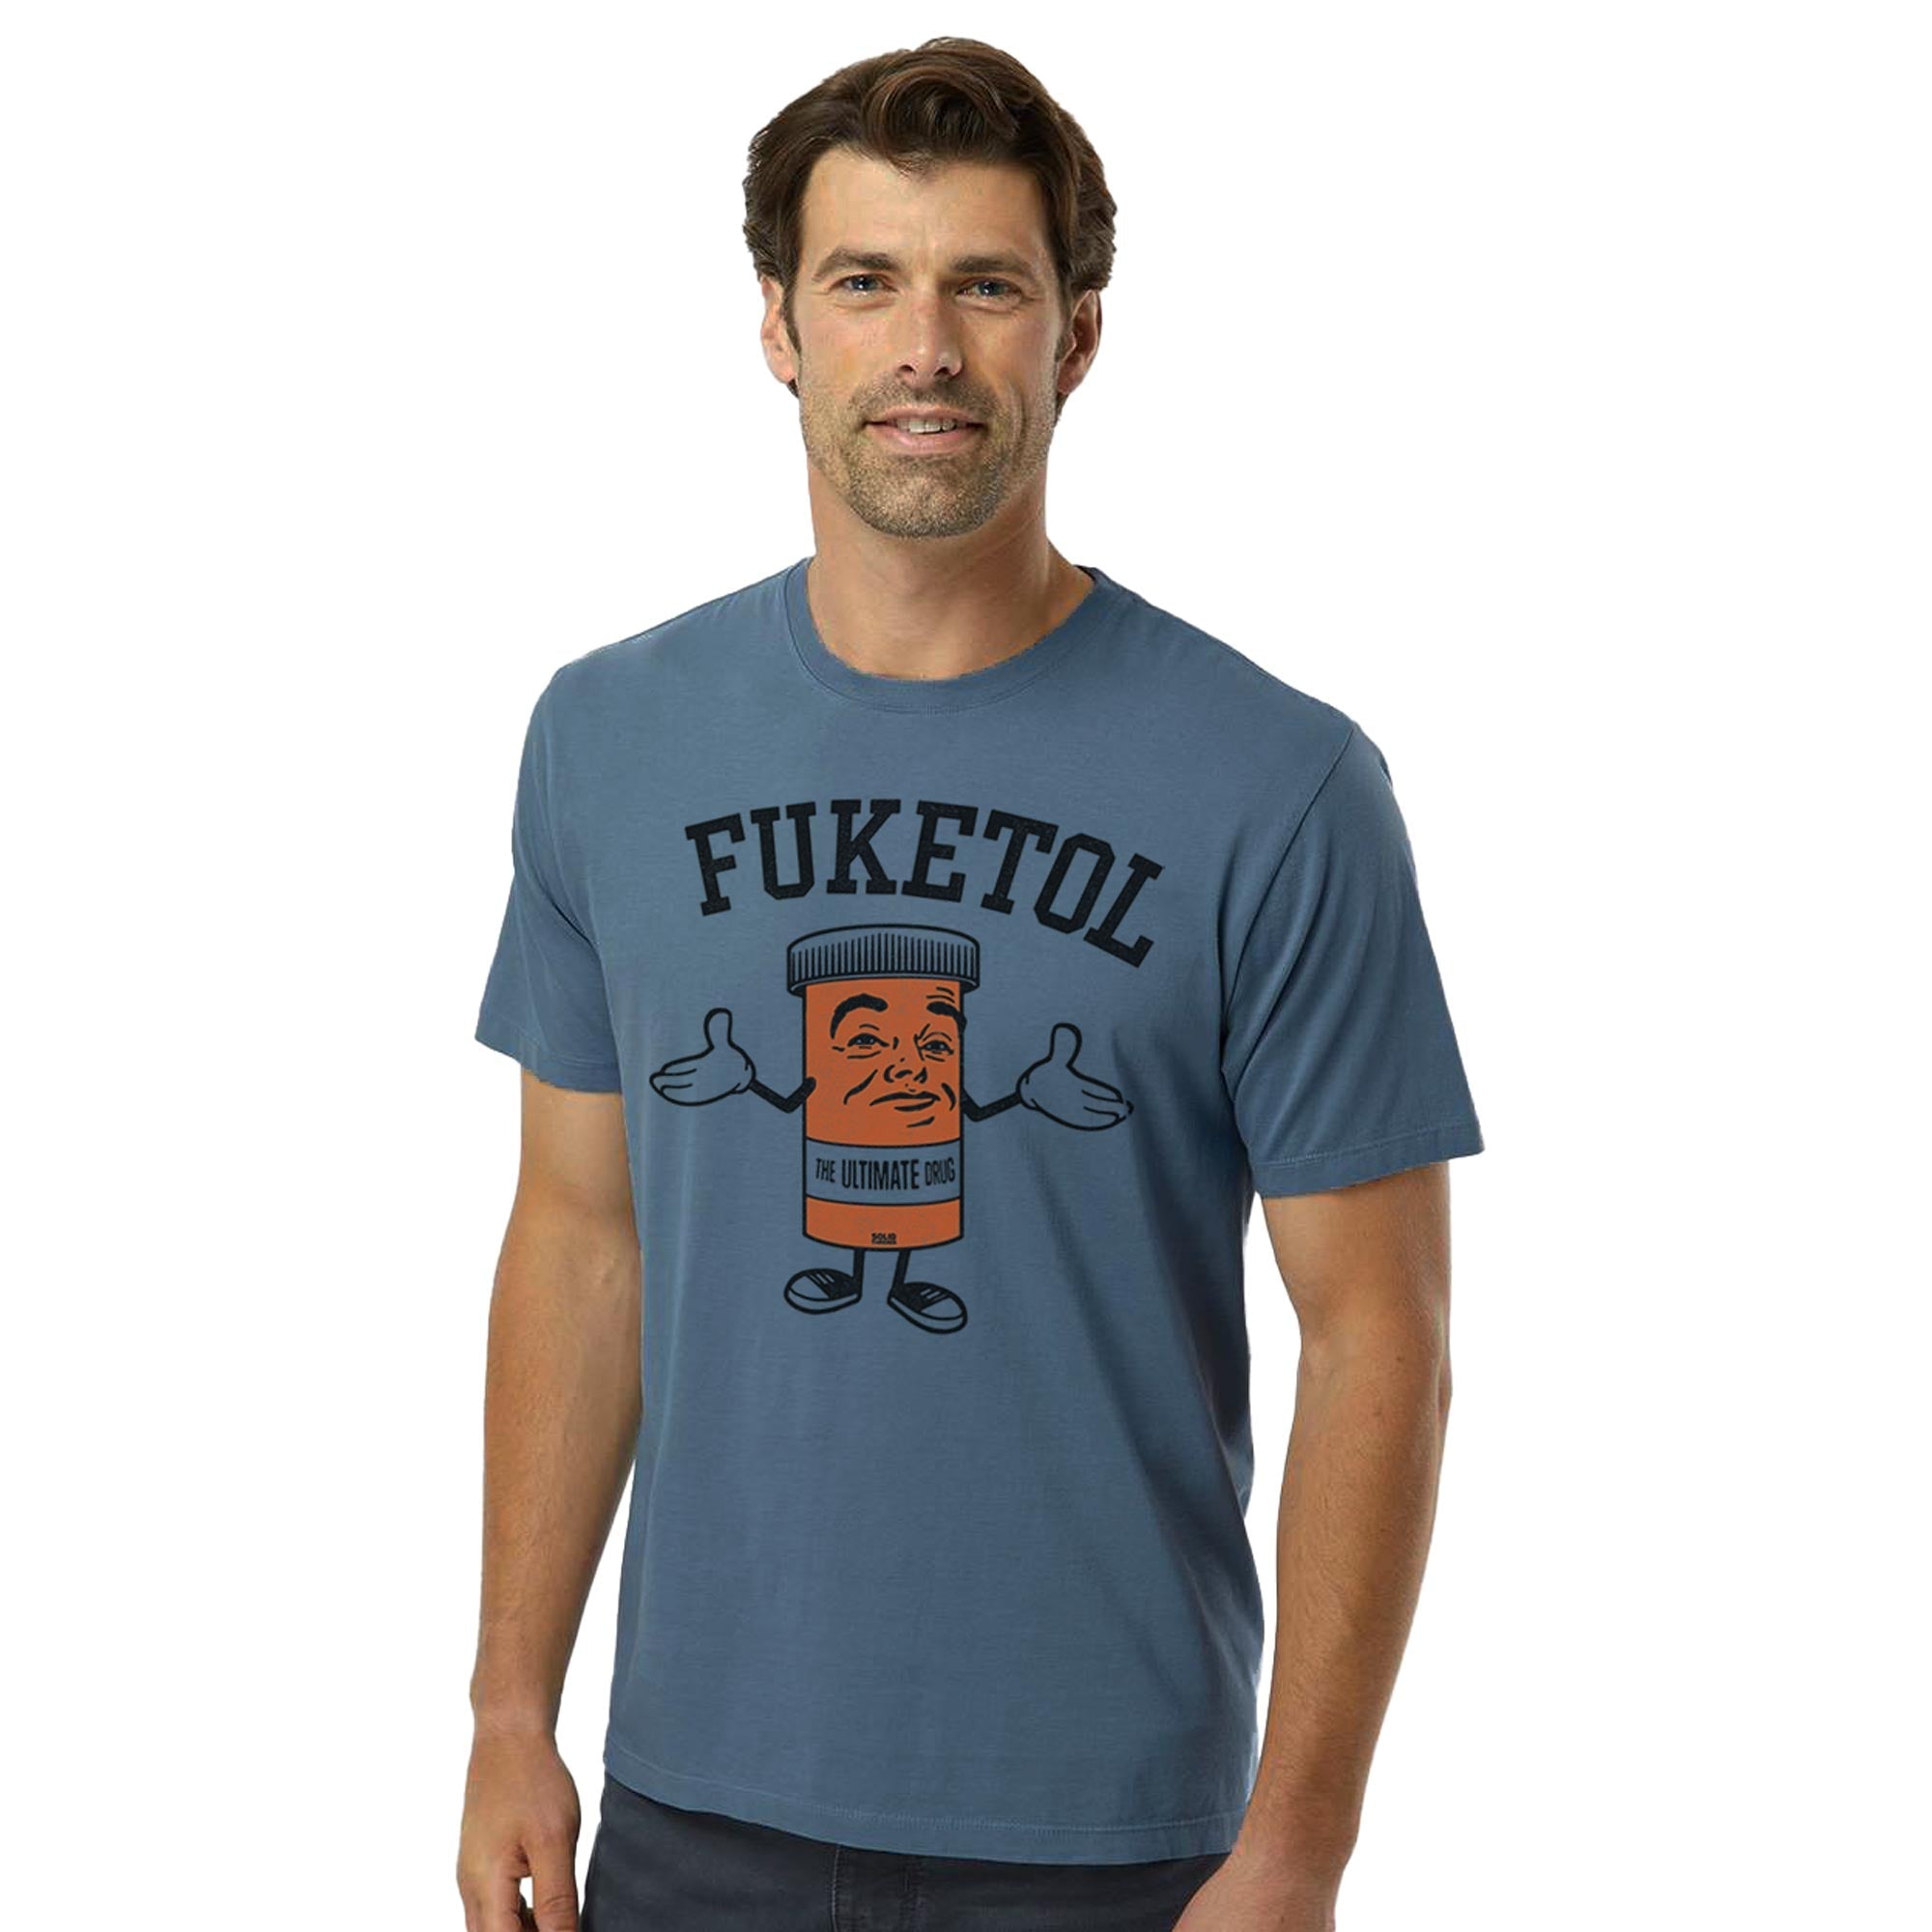 Fuketol Retro Organic Cotton T-shirt | Funny Pill Bottle  Tee On Model | Solid Threads